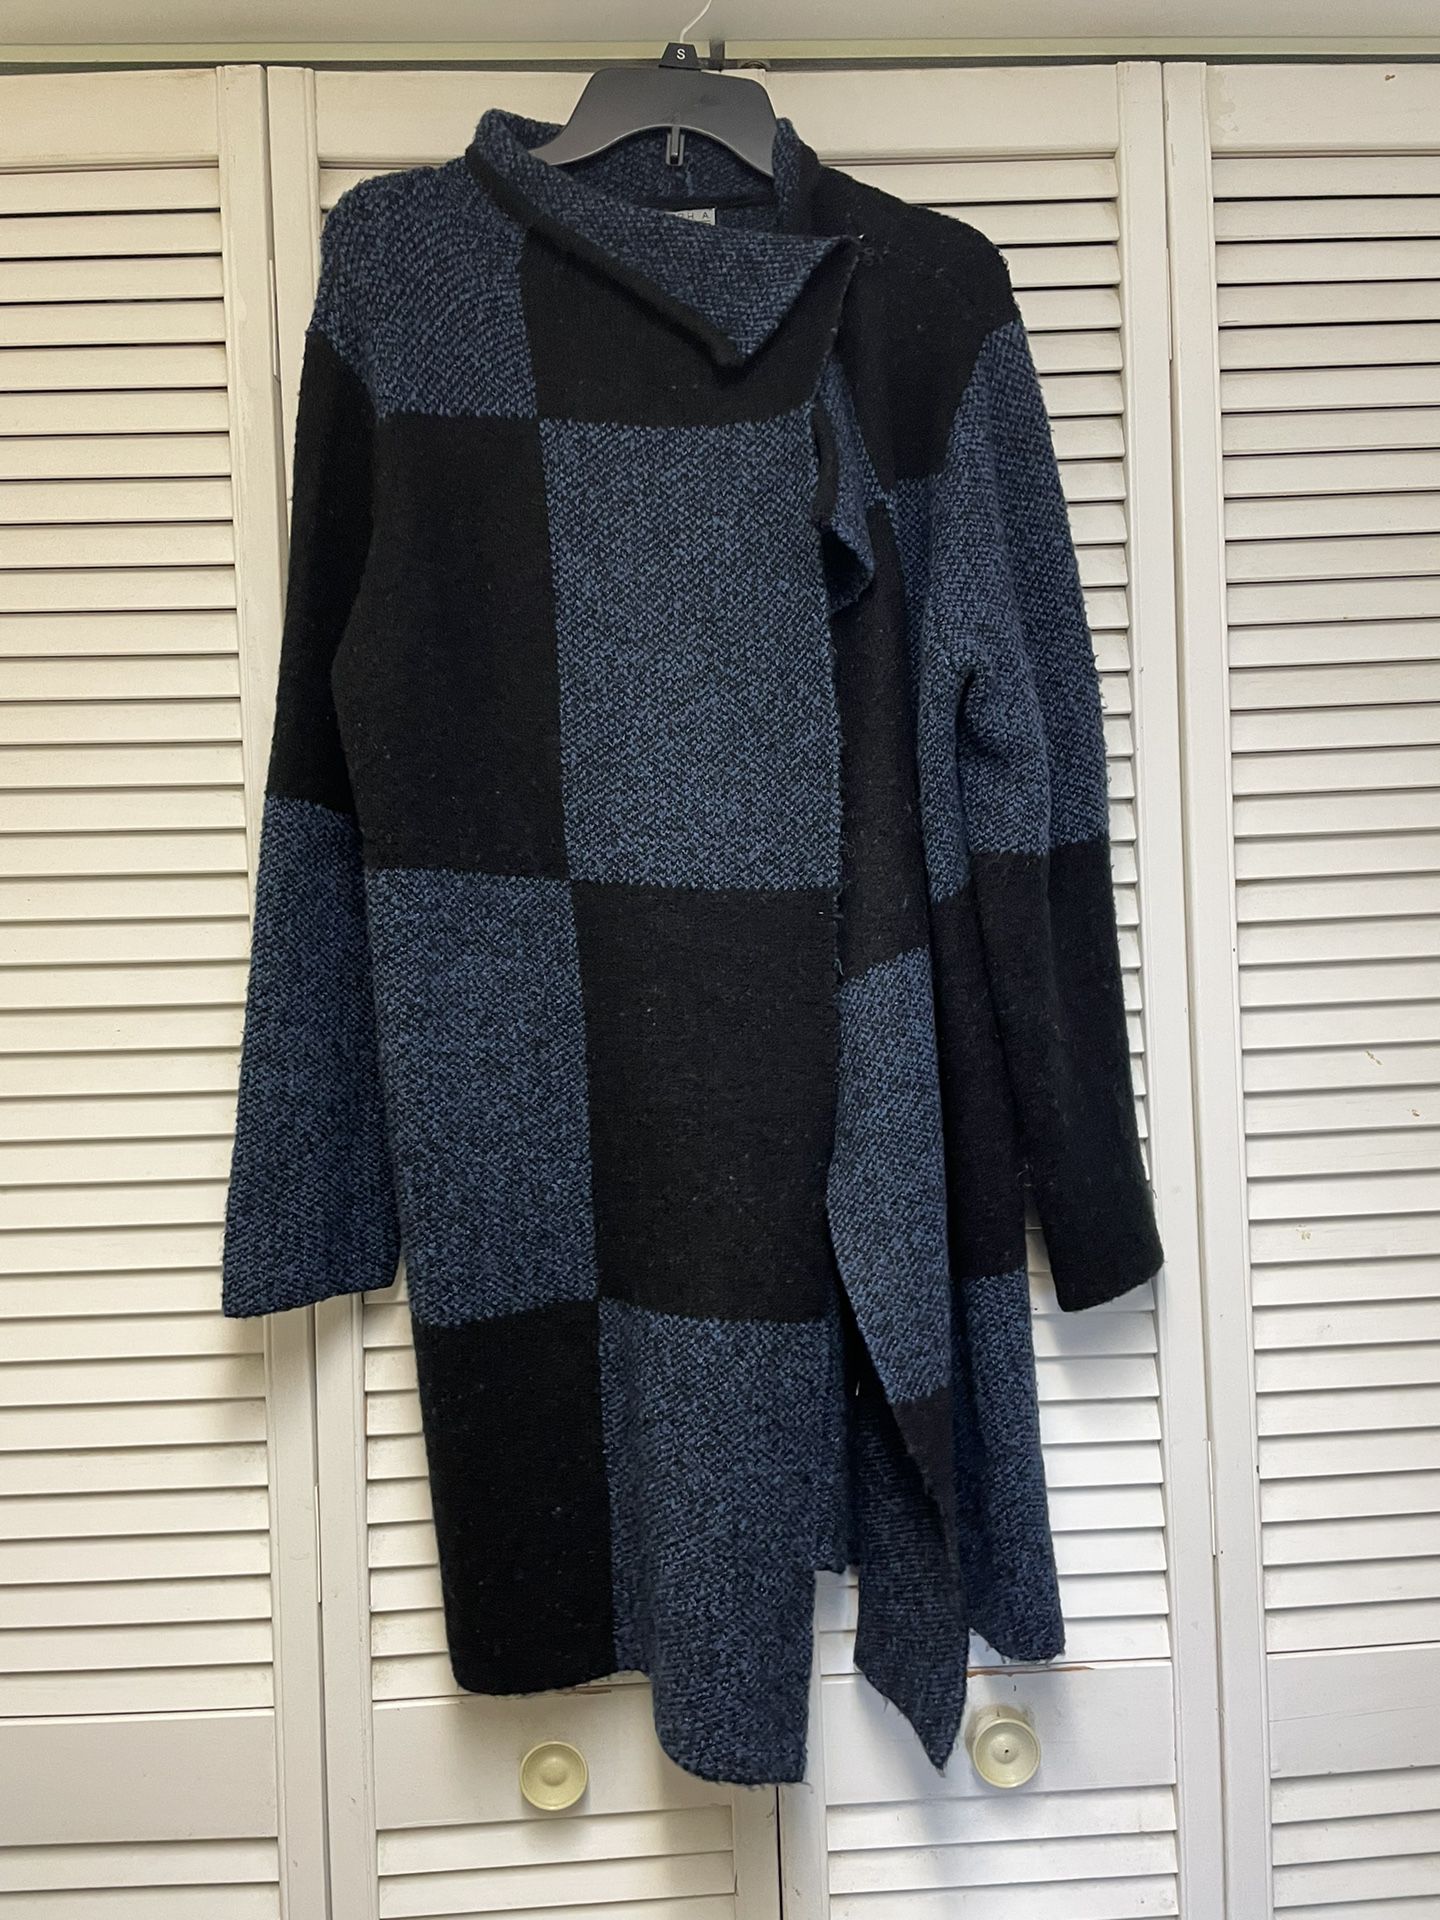 Women’s Coatigan Sweater. NWT petite large. Retails for $88.